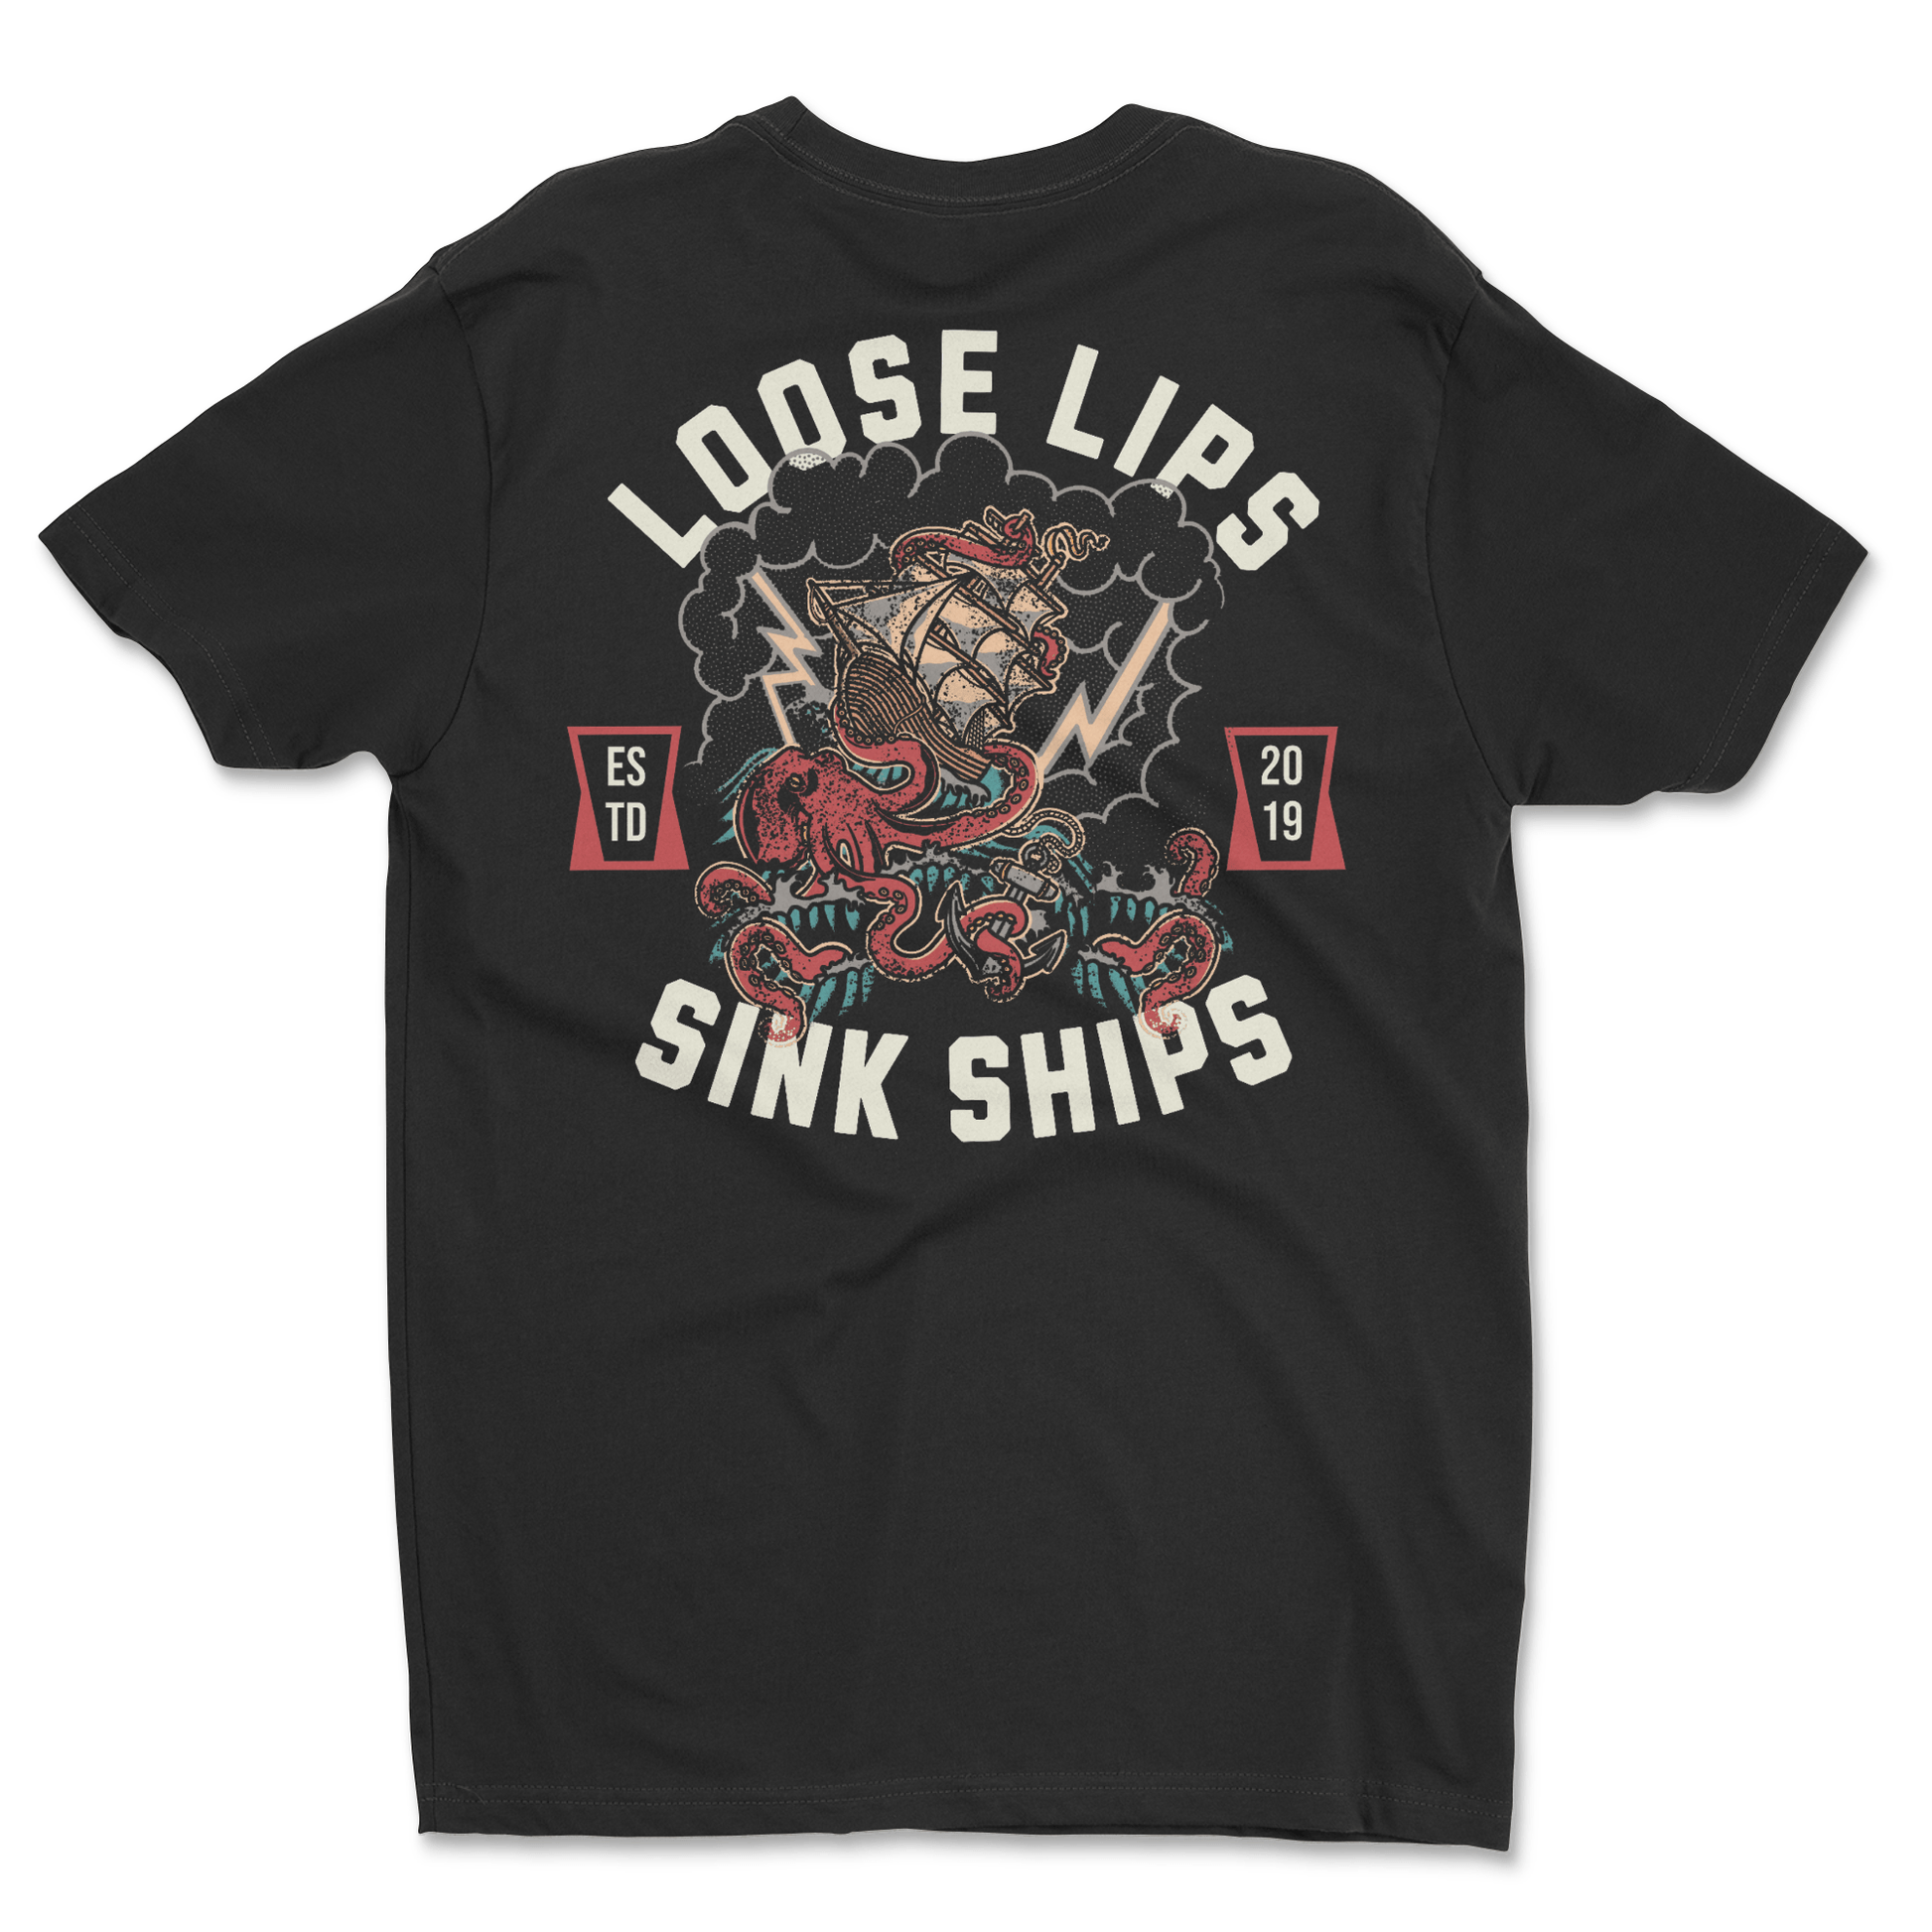 Legendary ltd. T SHIRT "Loose Lips Sink Ships" Tee